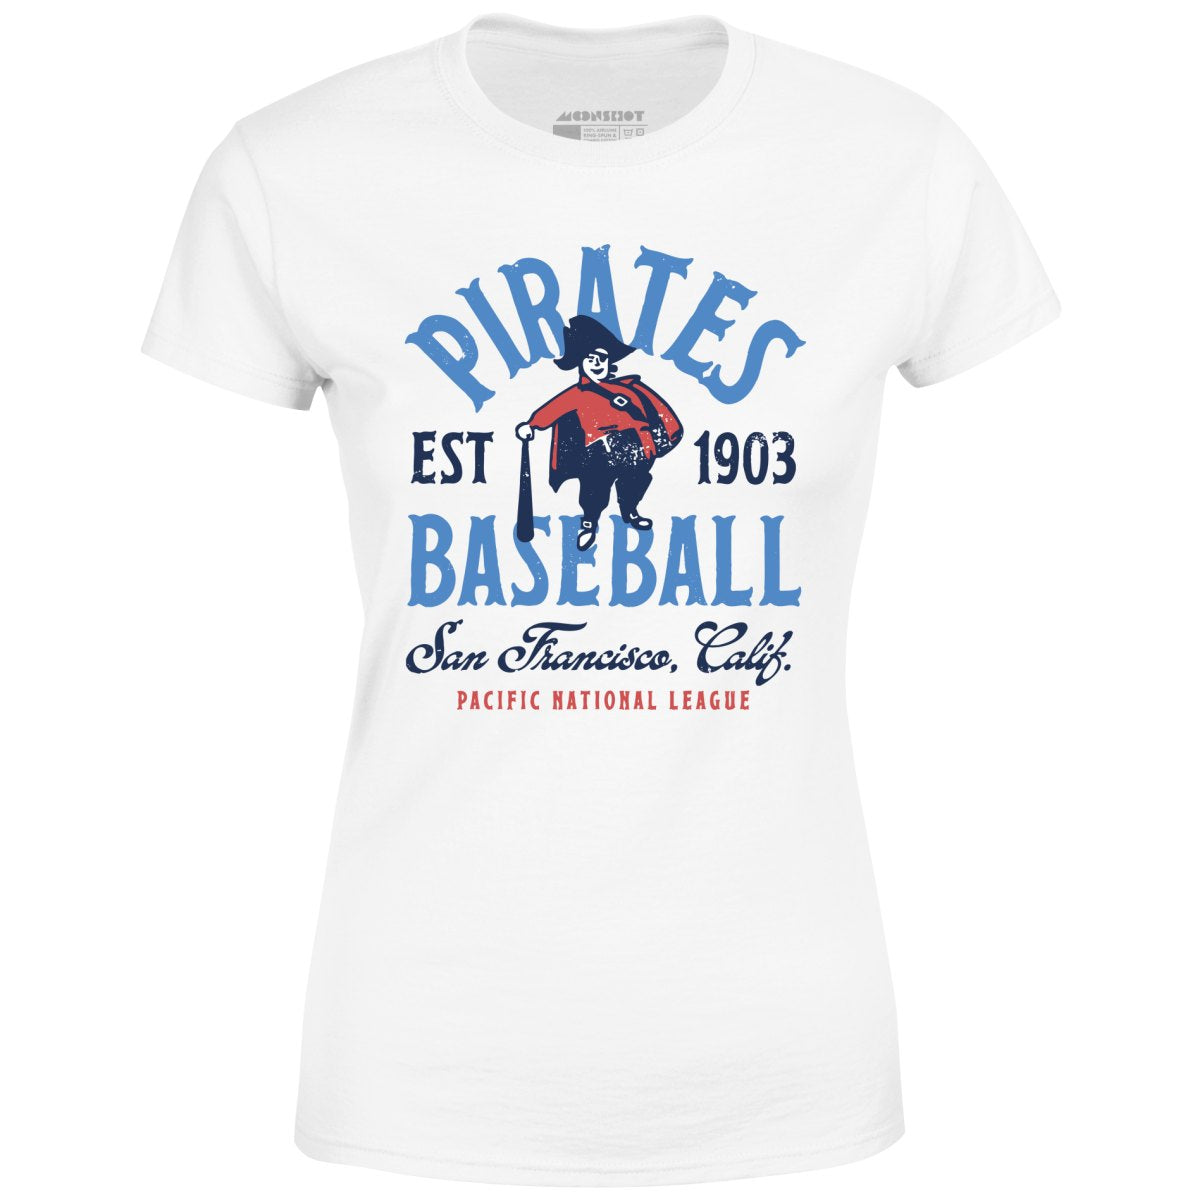 San Francisco Pirates - California - Vintage Defunct Baseball Teams - Women's T-Shirt